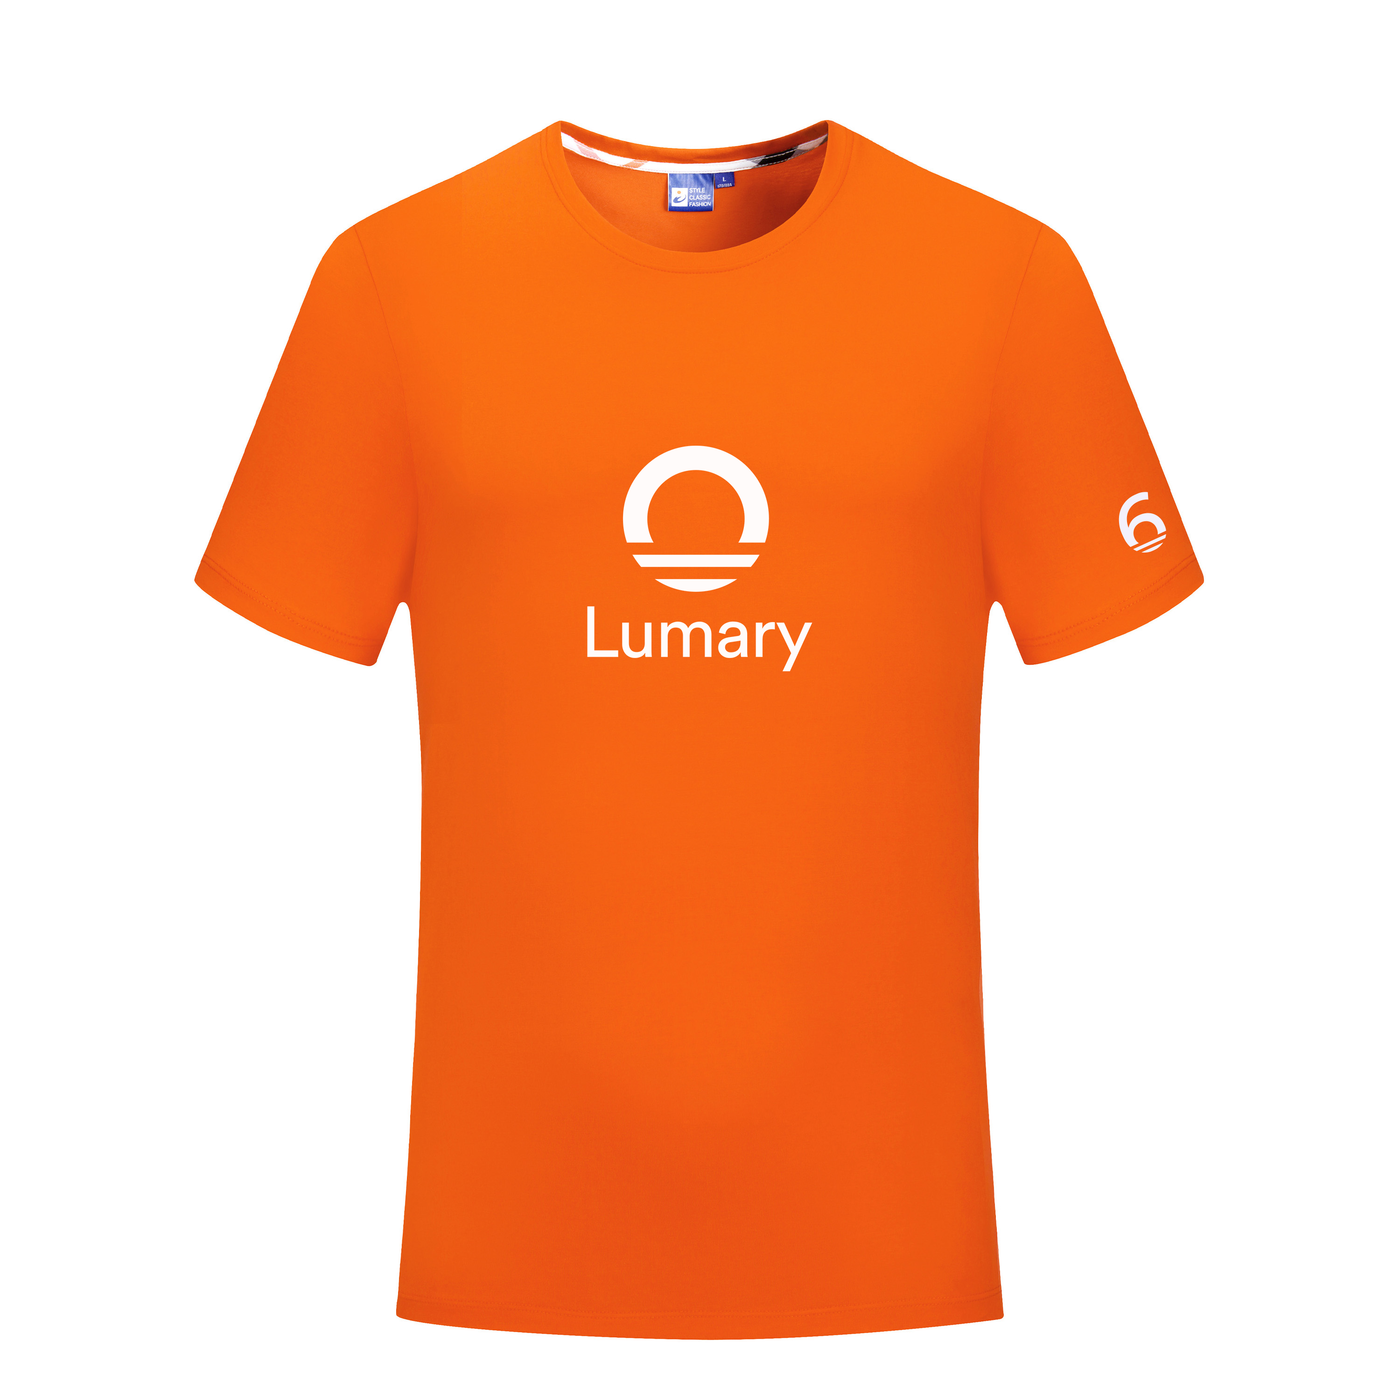 Lumary T-shirt